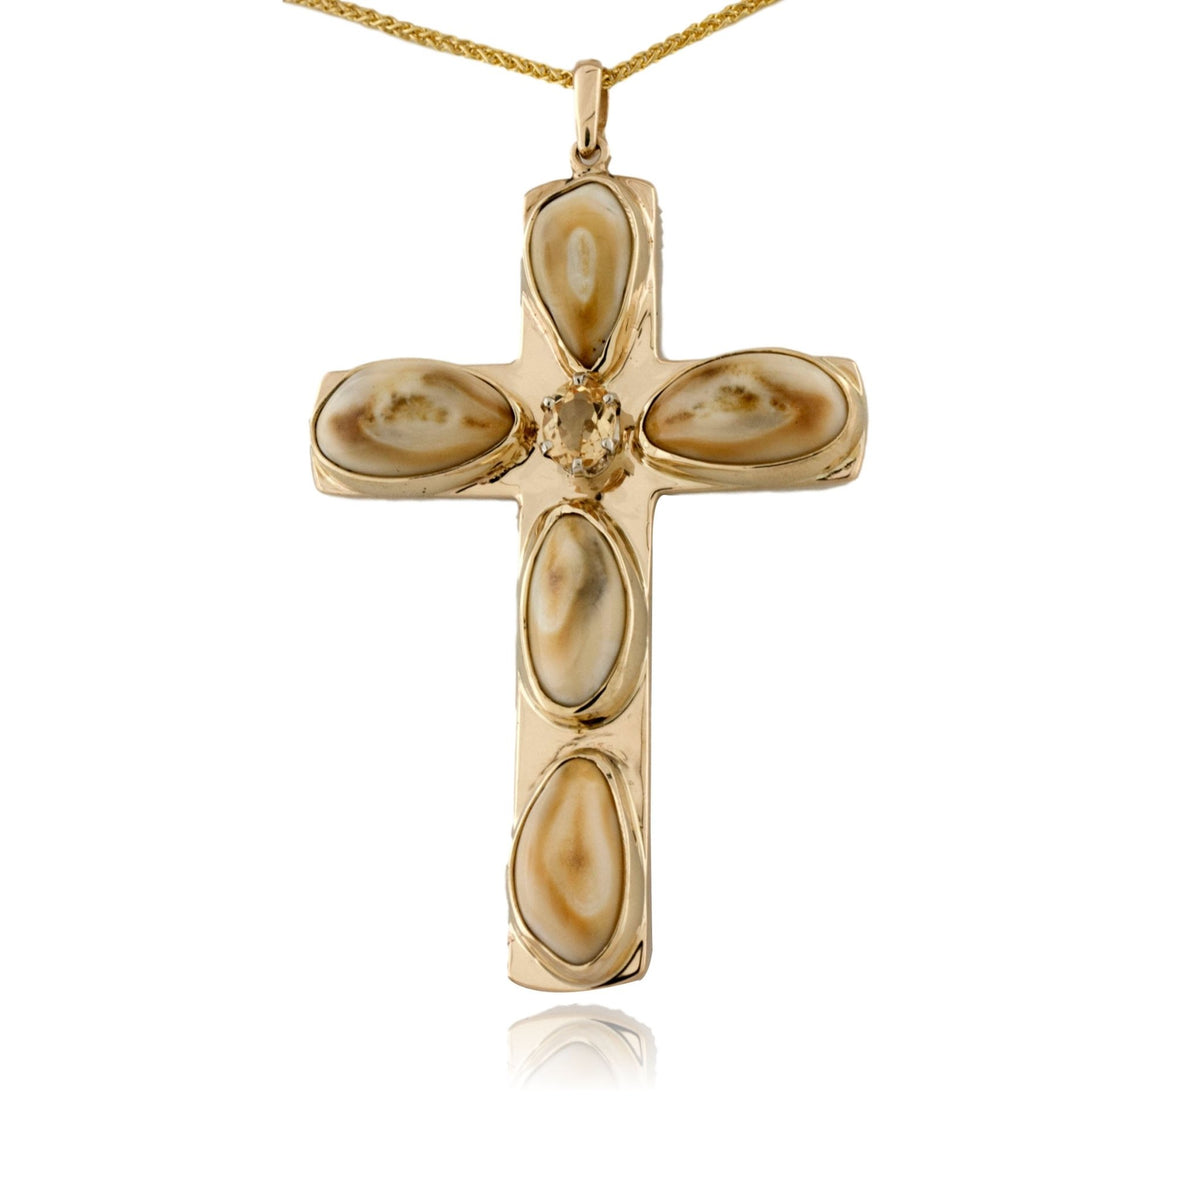 Five Elk Ivory Cross Necklace - Park City Jewelers